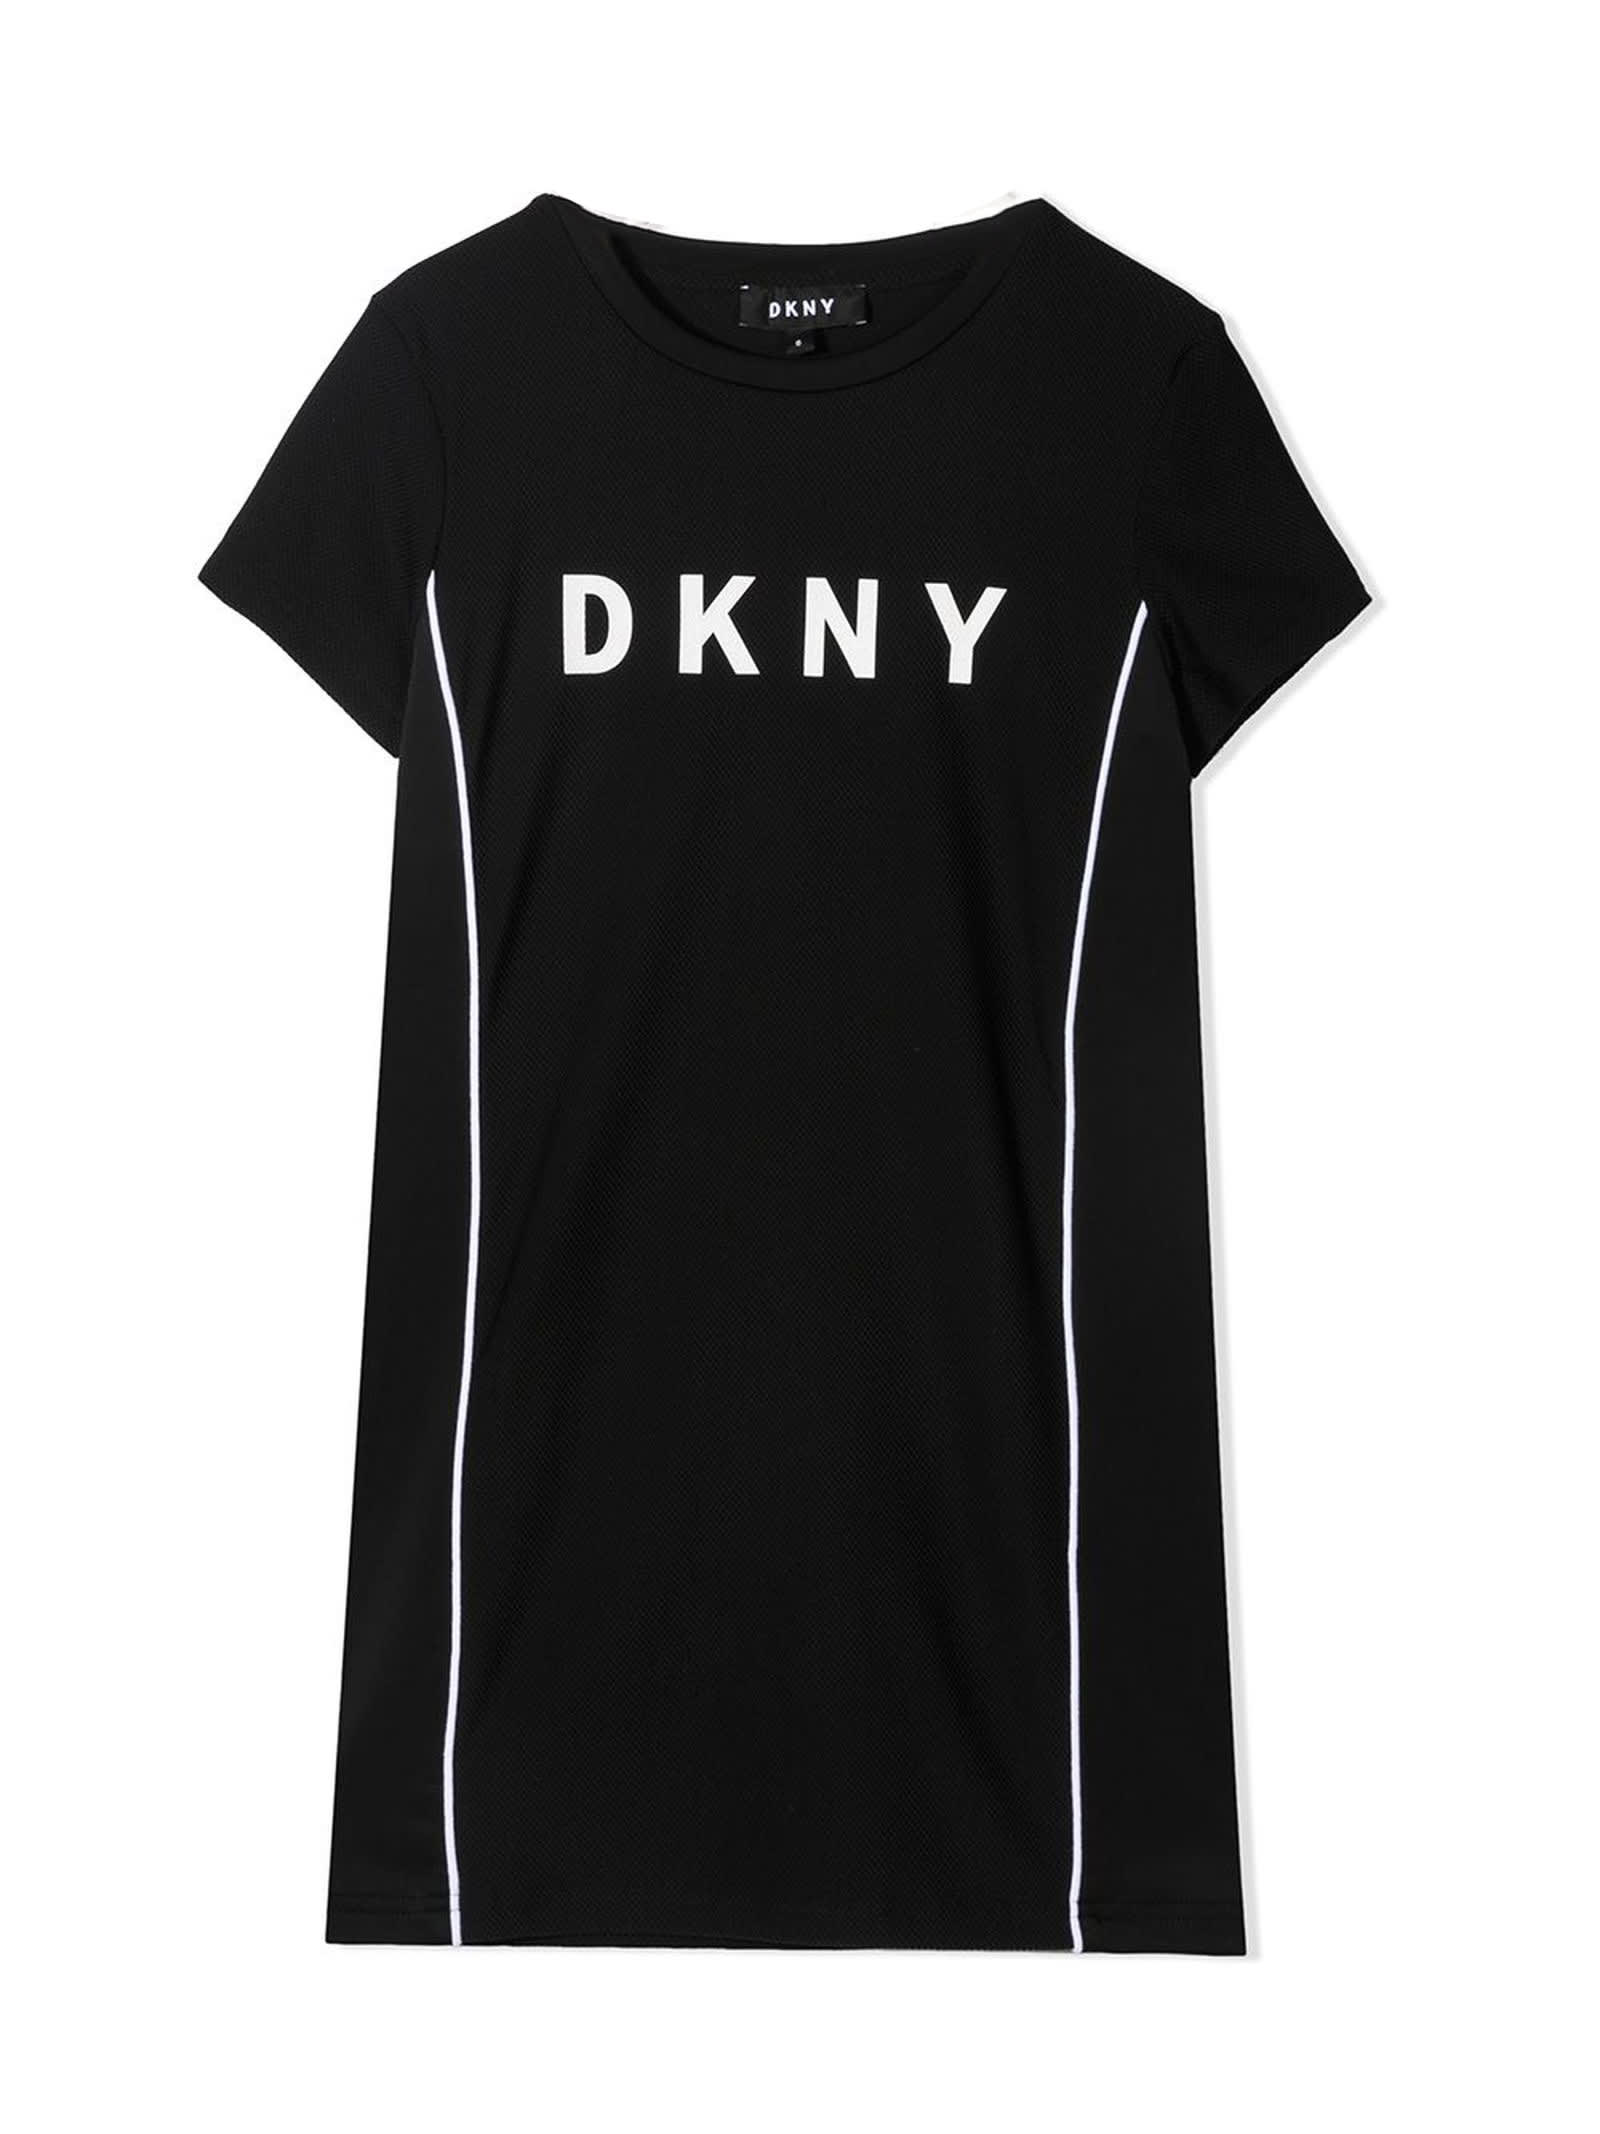 DKNY Black And White Dress